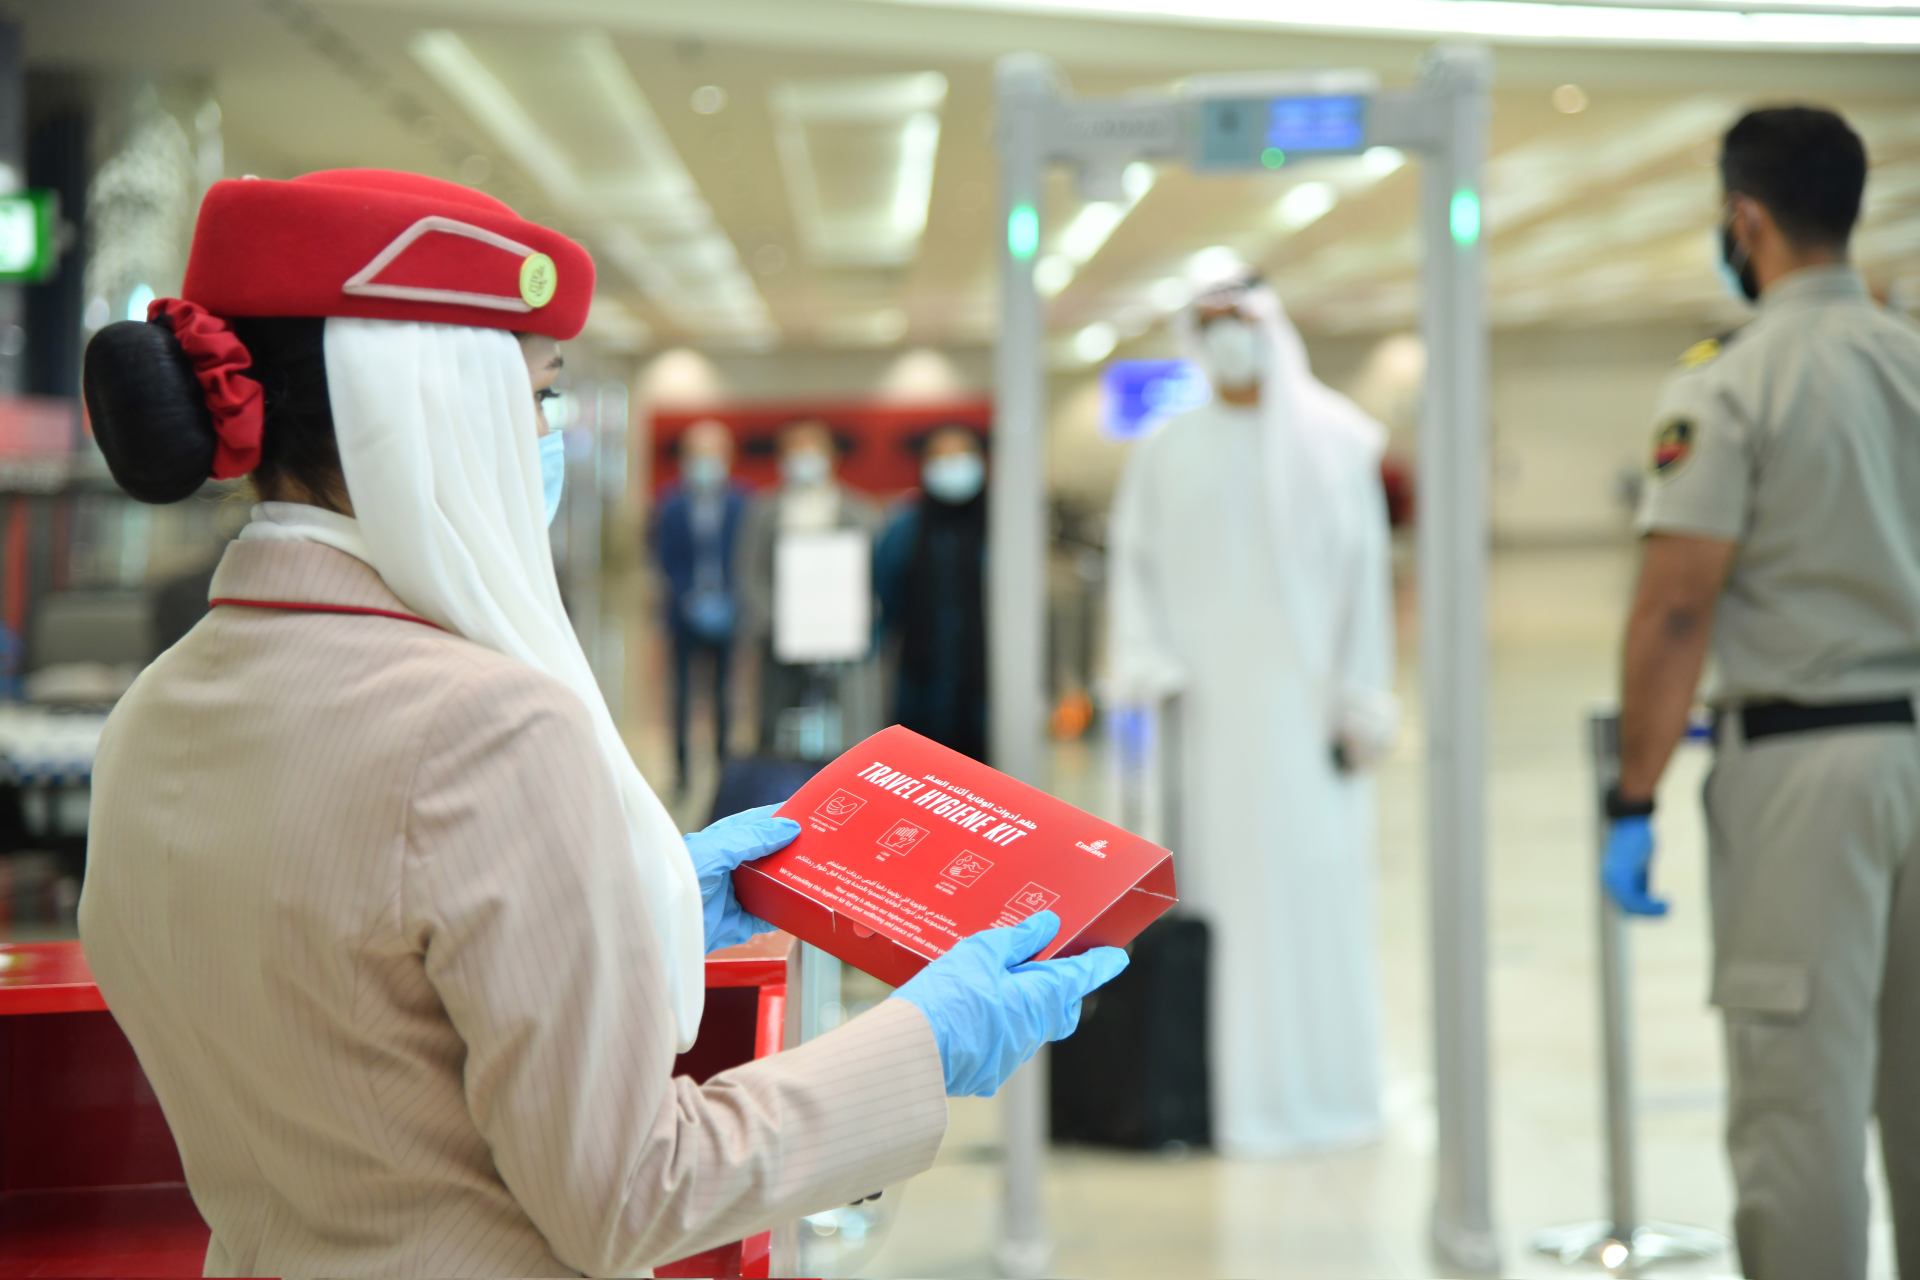 Kostenloses Emirates Hygiene Kit